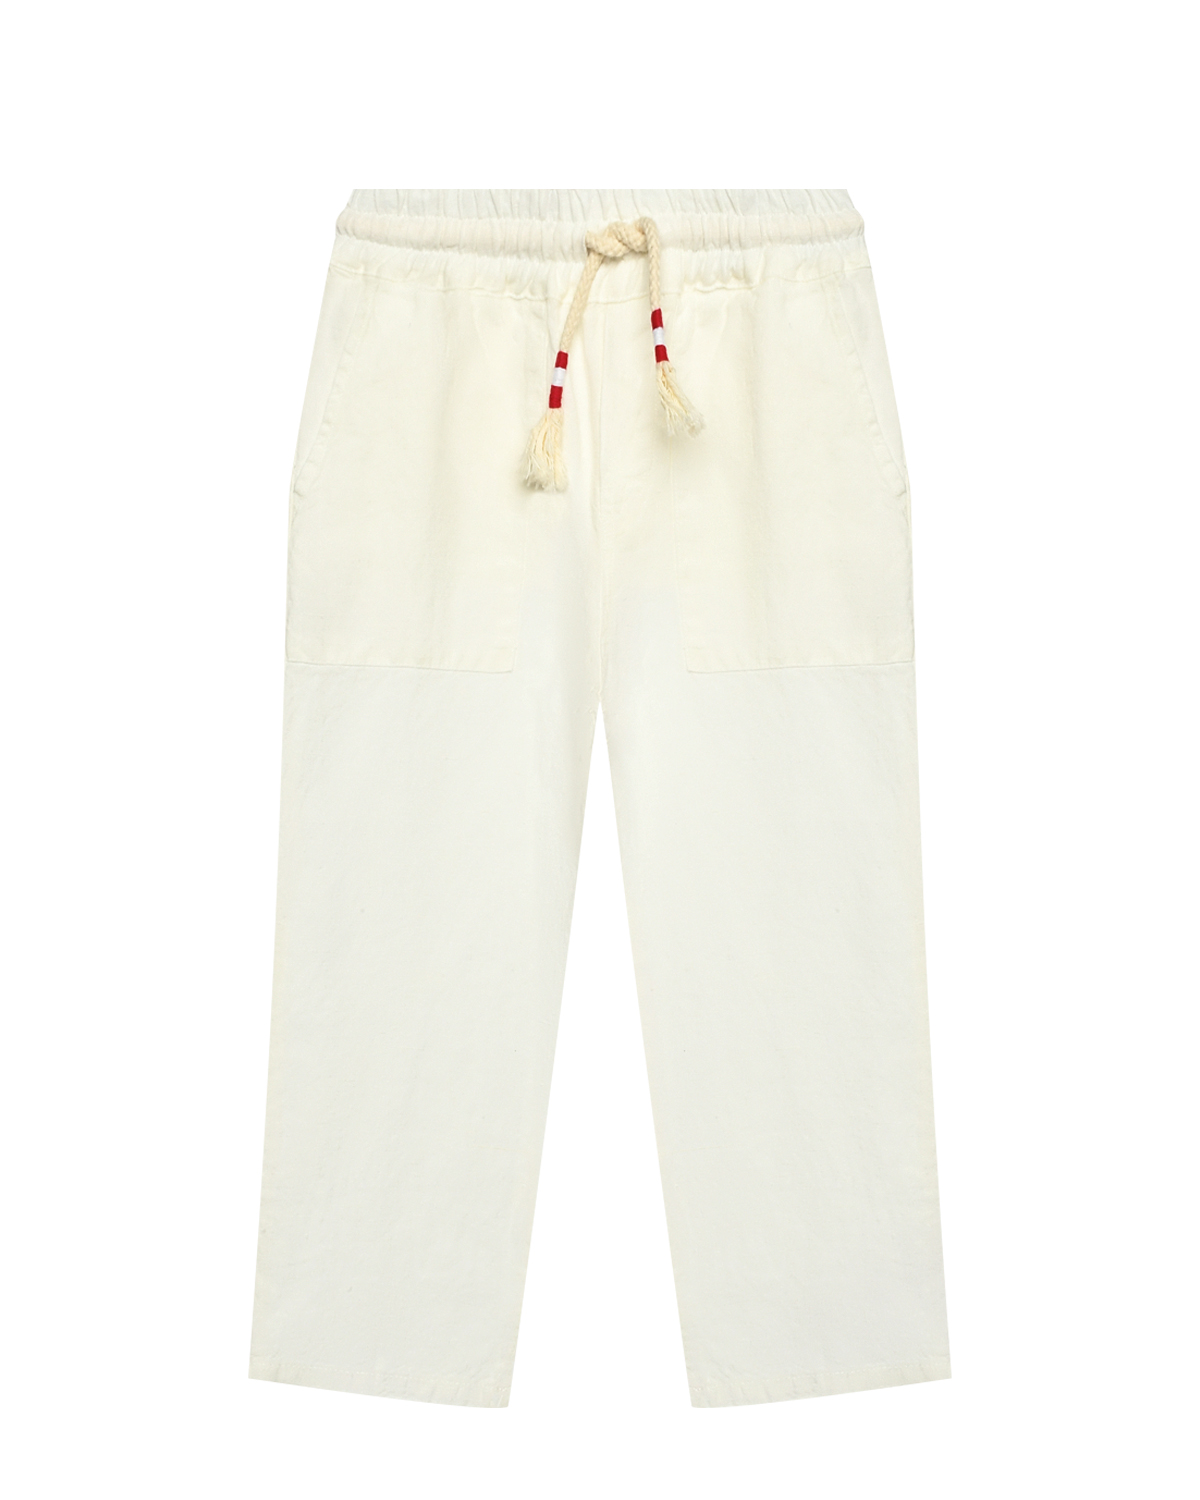 Льняные брюки, белые Saint Barth, размер 164, цвет нет цвета